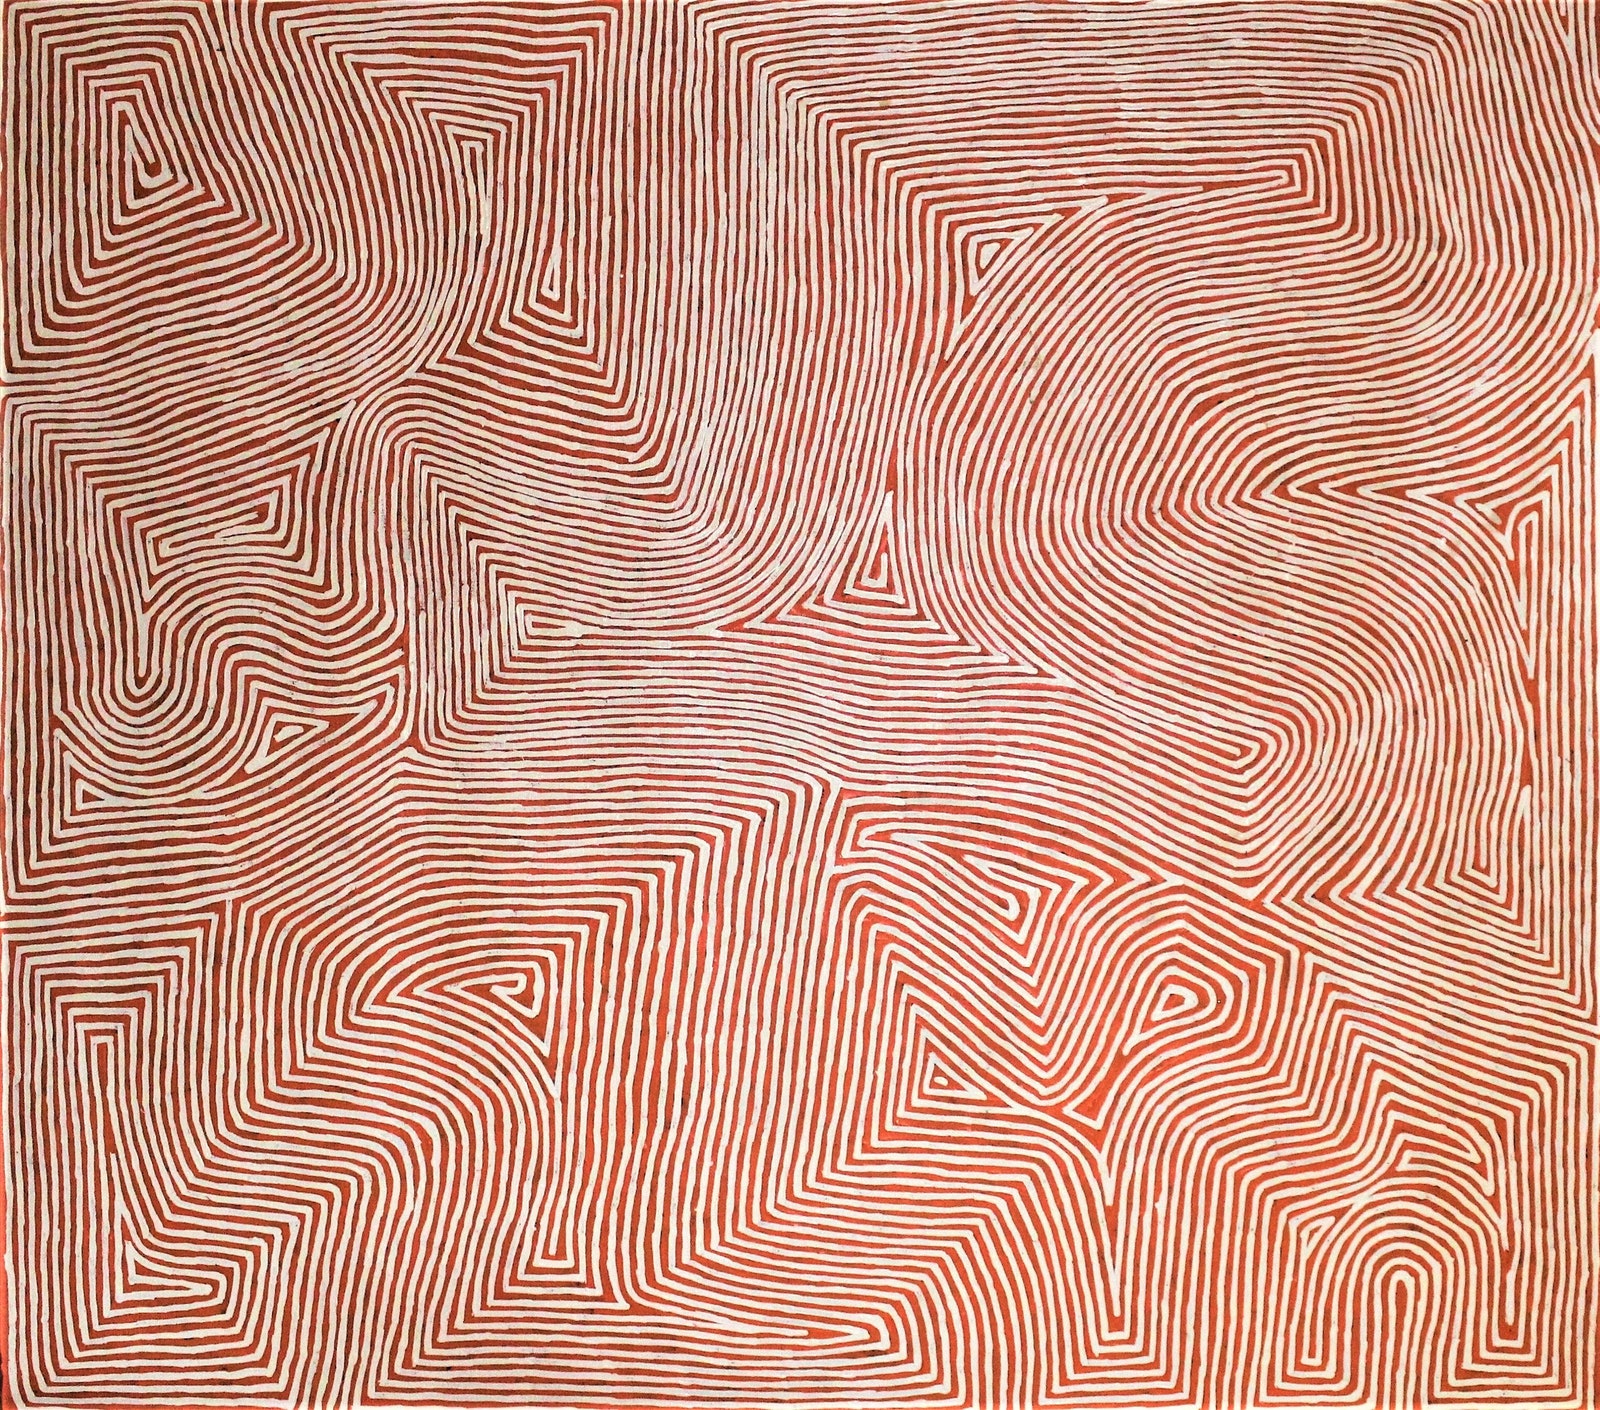 Джордж Хэйрбраш Тьюнгаррай Mamultjulkunga 2018 Австралия акрил на холсте 112 x 102 см галерея Mathivet 17 000 евро.